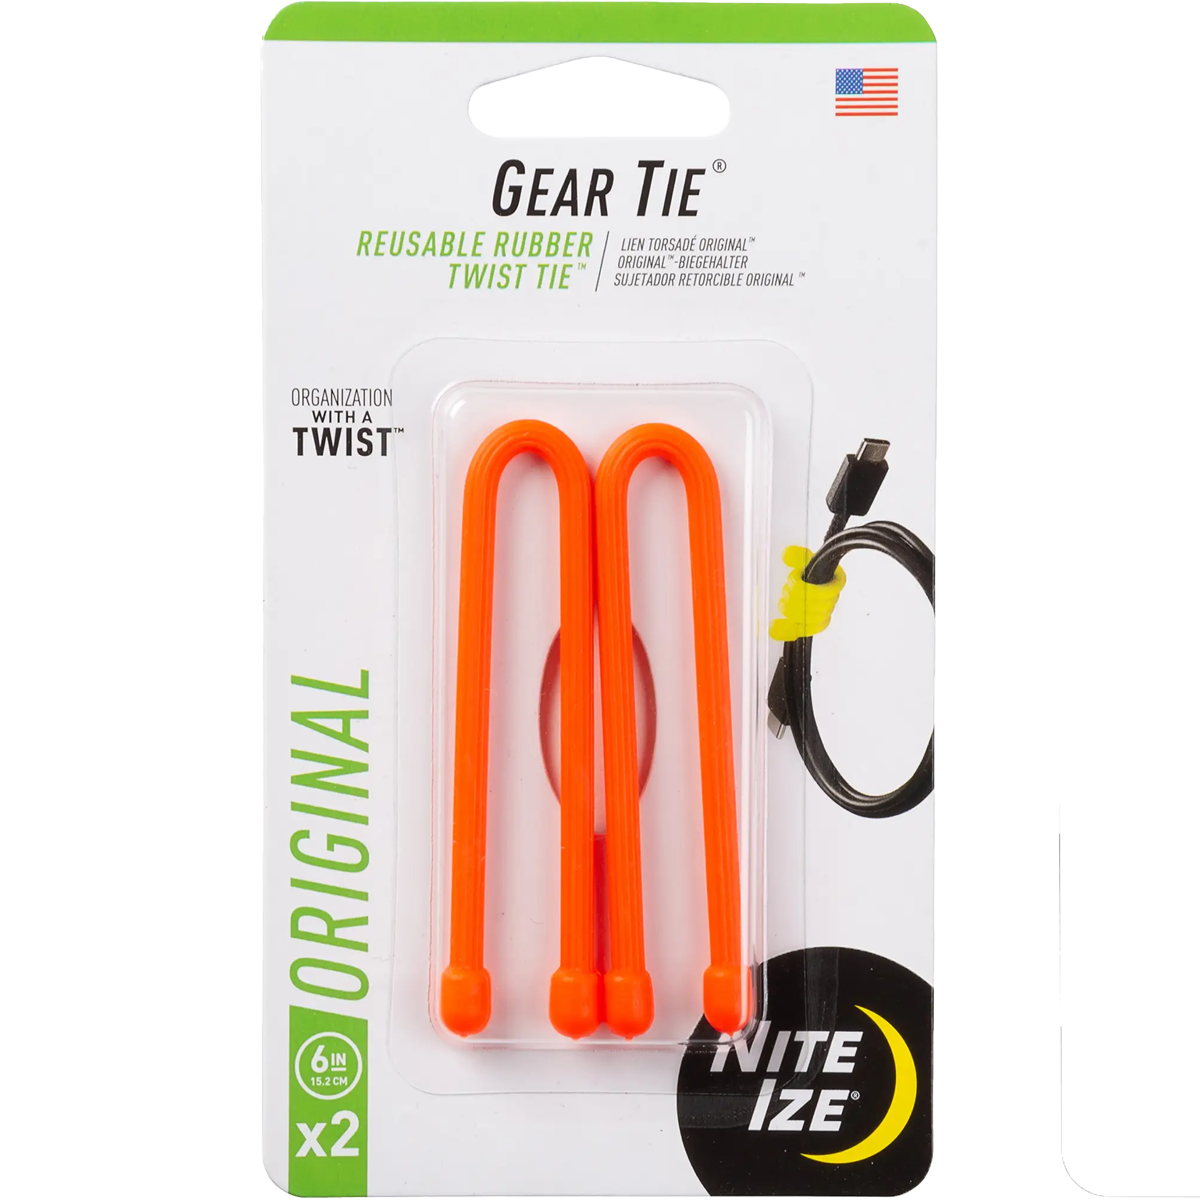 Gear Tie Reusable Rubber Twist Tie 6